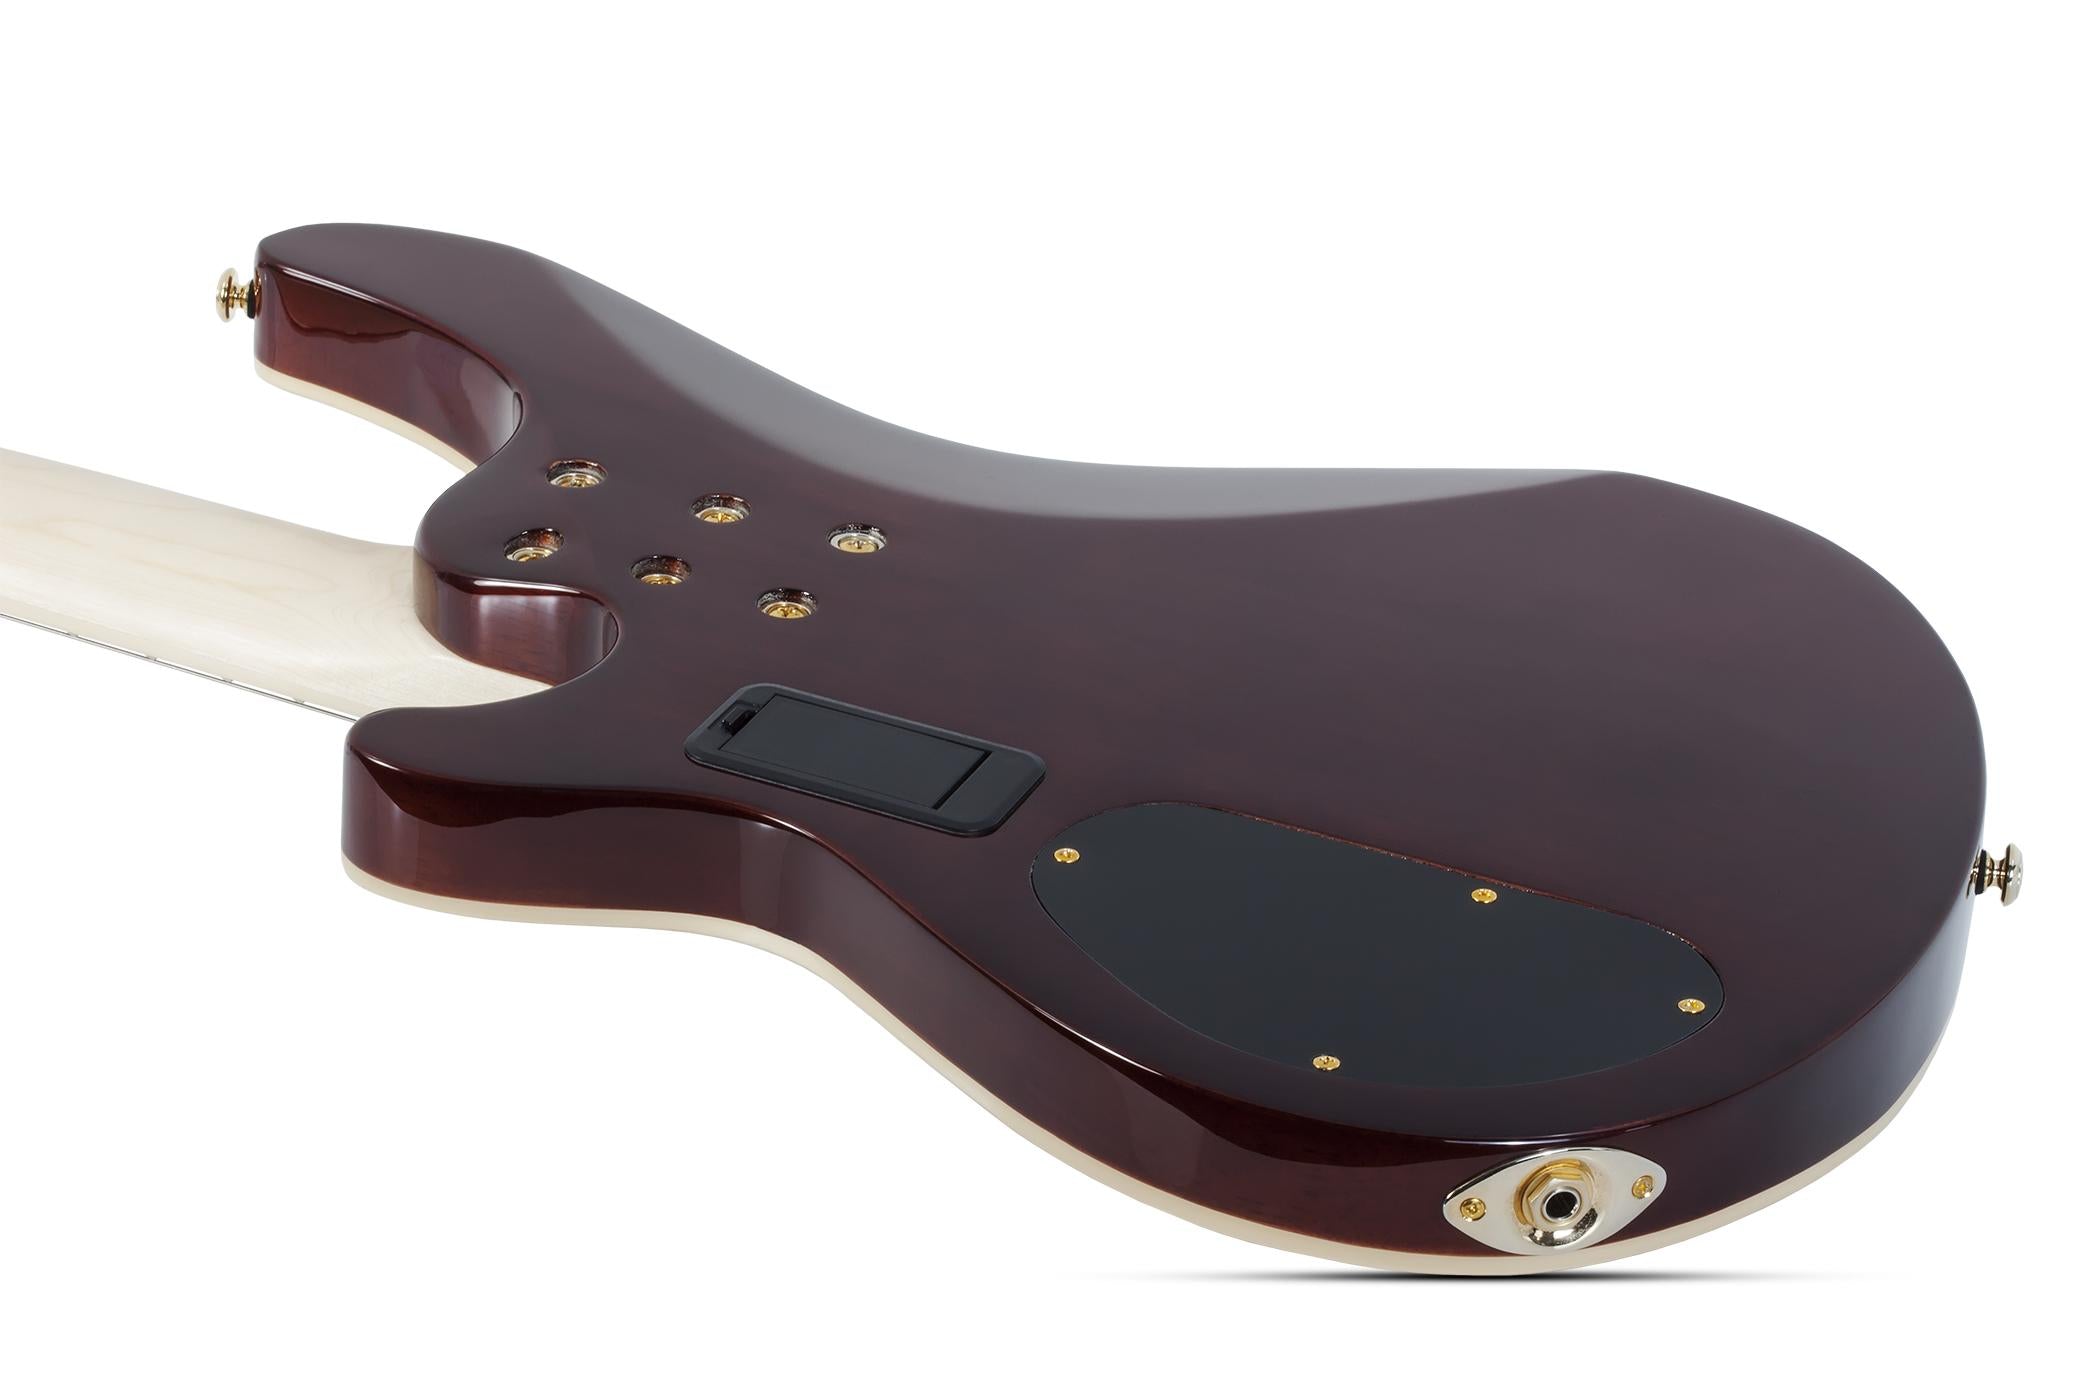 Schecter Omen Extreme-5 5-String Electric Bass, Gloss Natural 2051-SHC